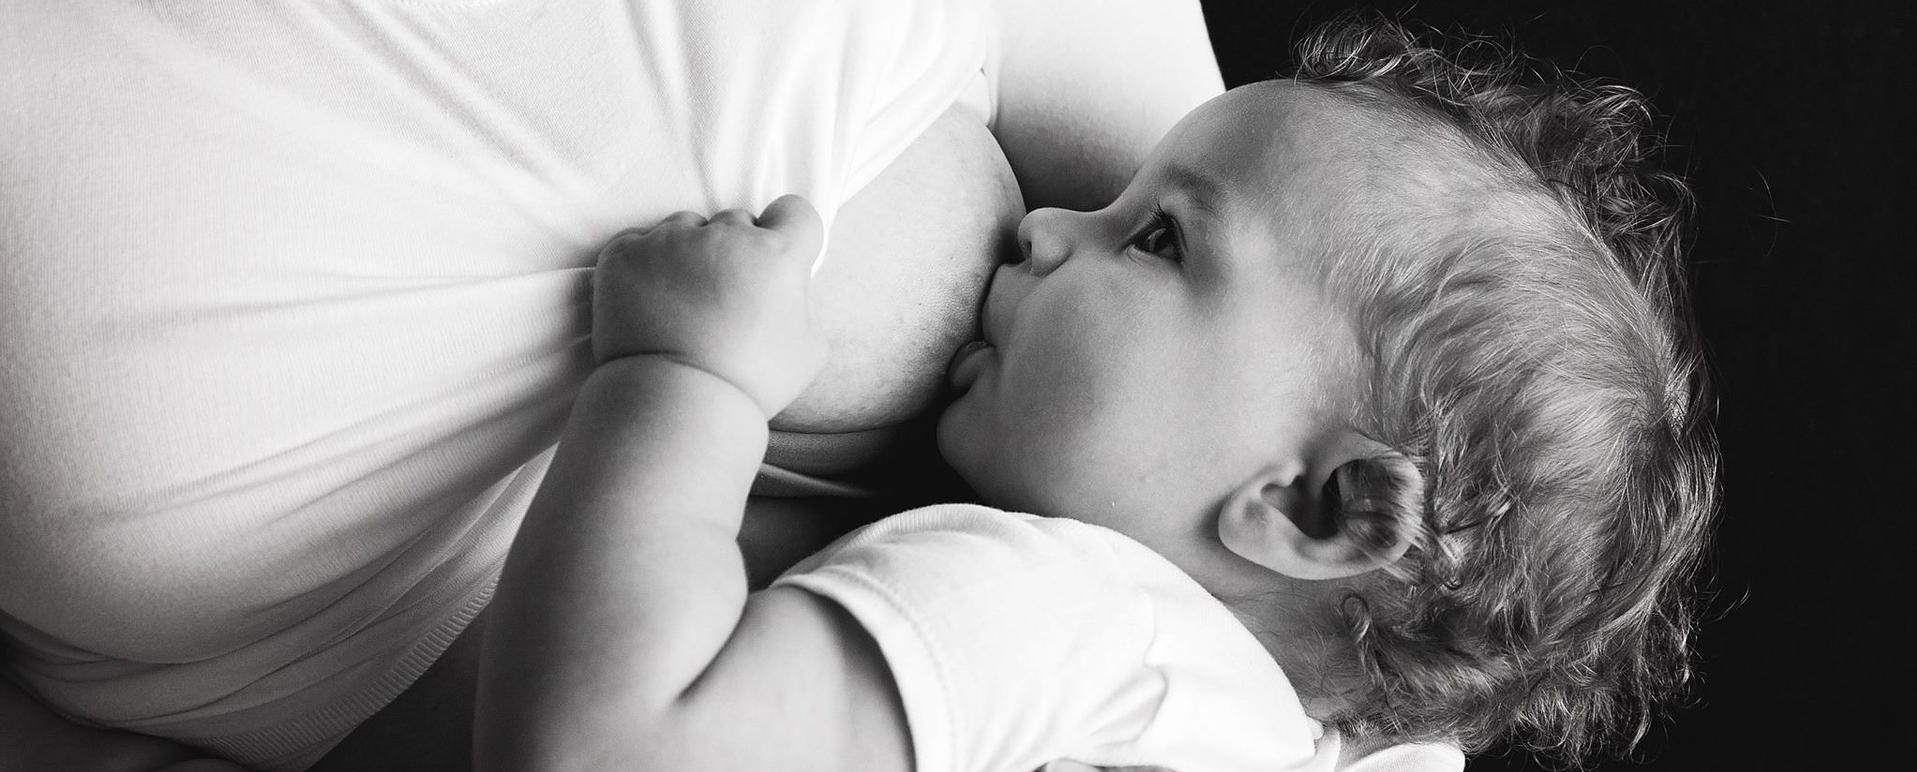 Image of a baby breastfeeding